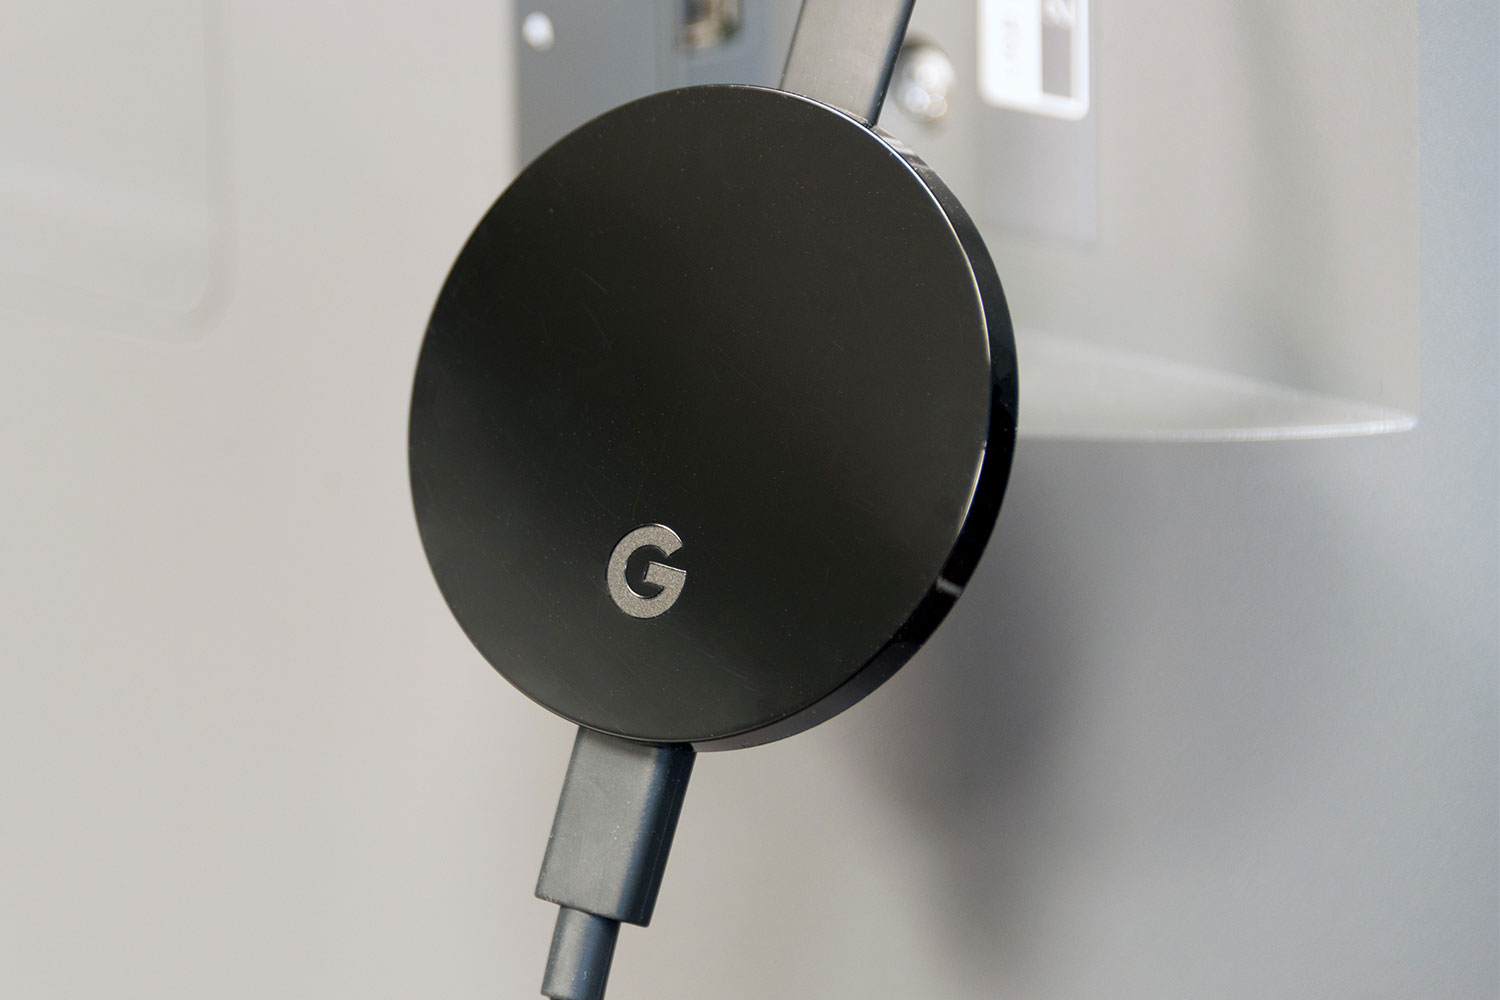 Google Chromecast Ultra Review: Still Going Strong | Digital Trends